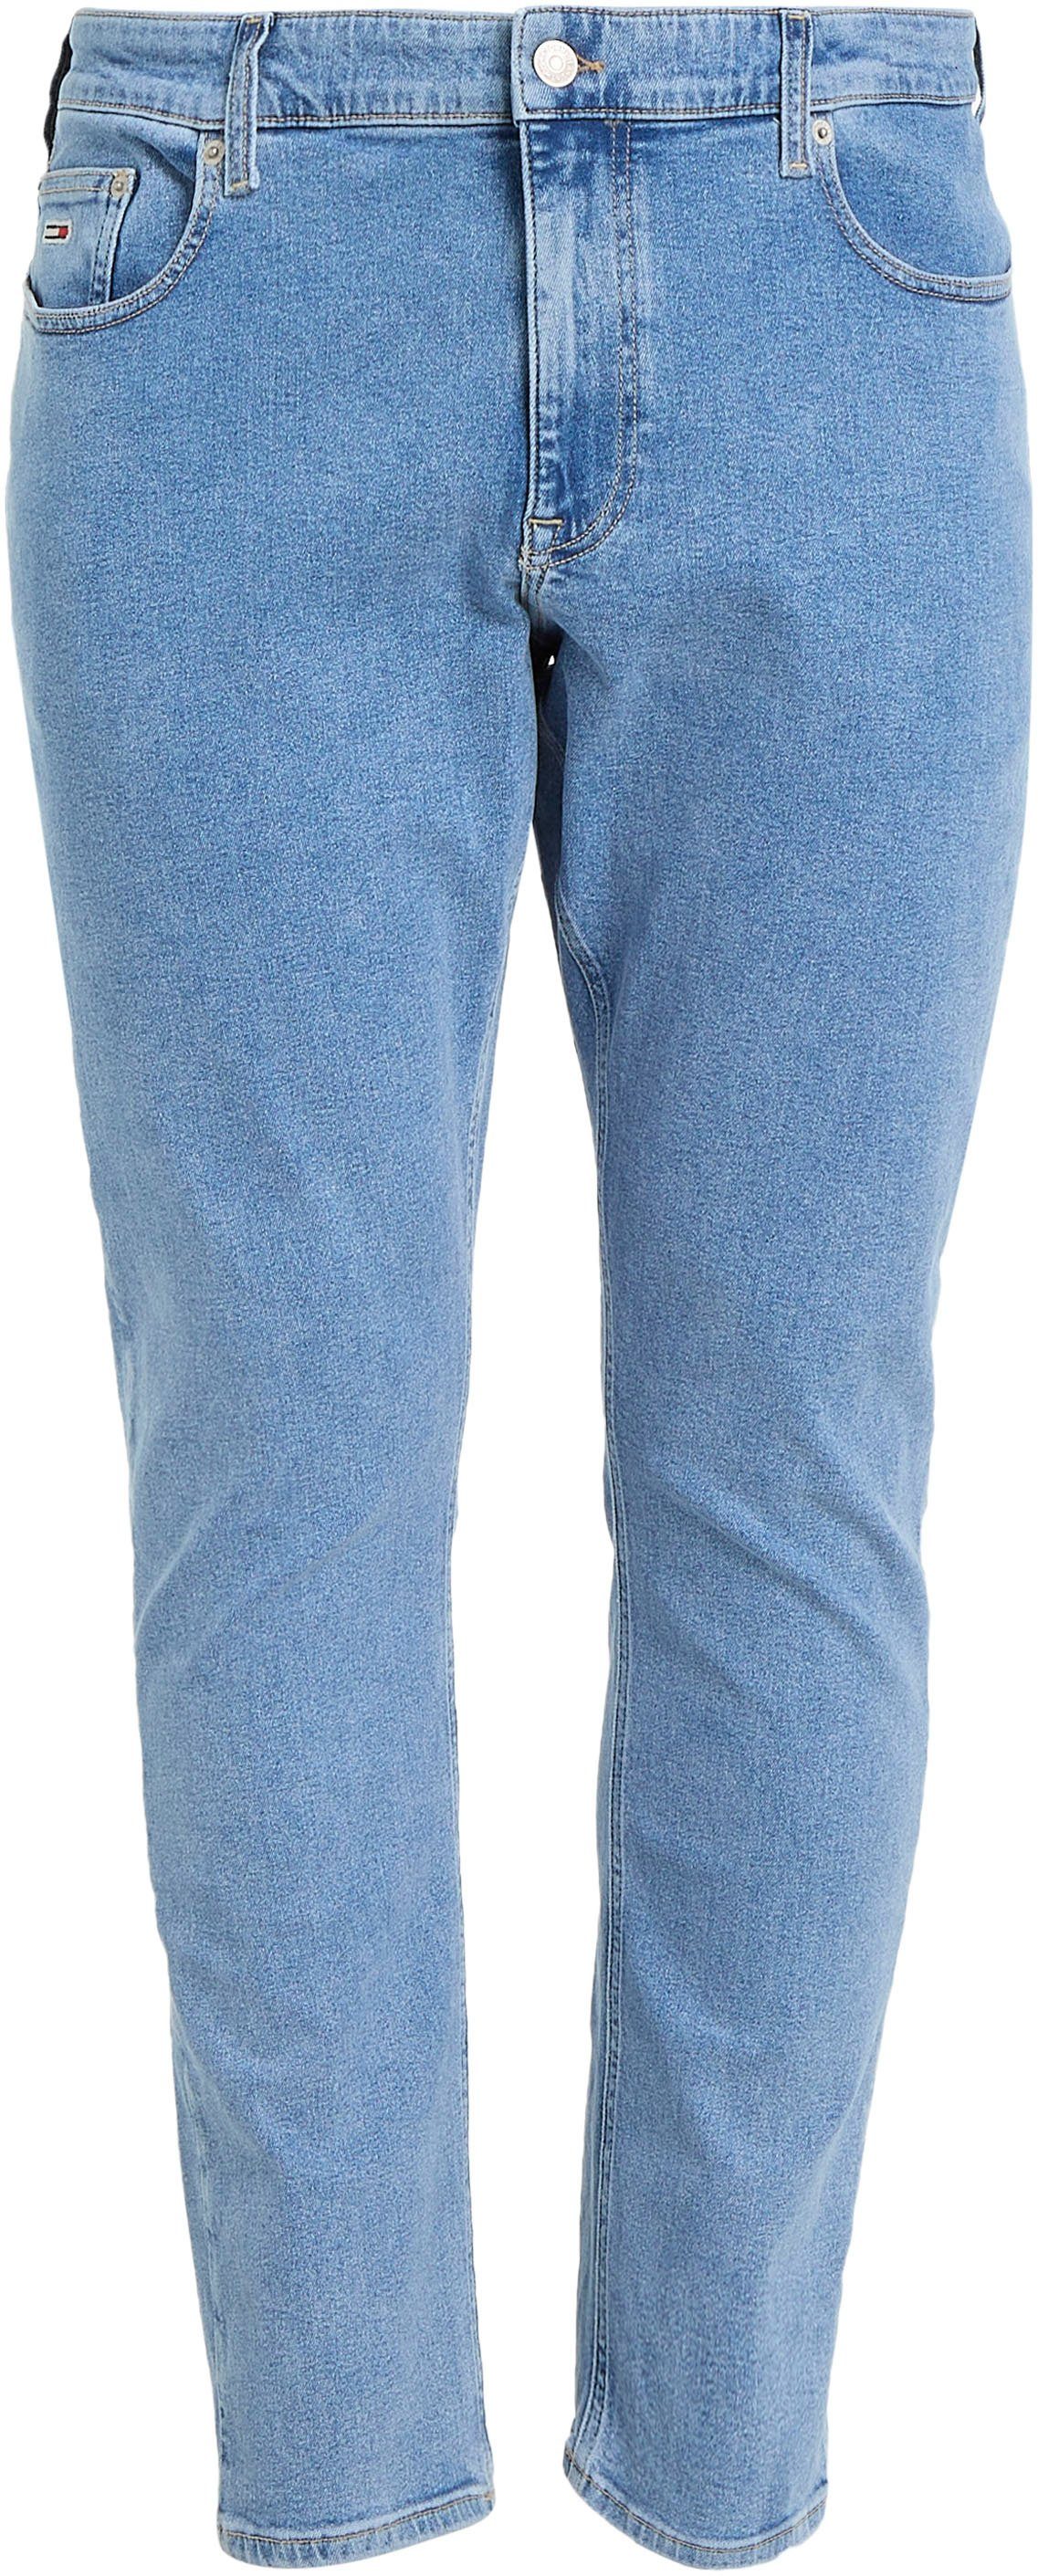 Plus Stretch-Jeans Tommy SLIM SCANTON PLUS CG4239 Jeans